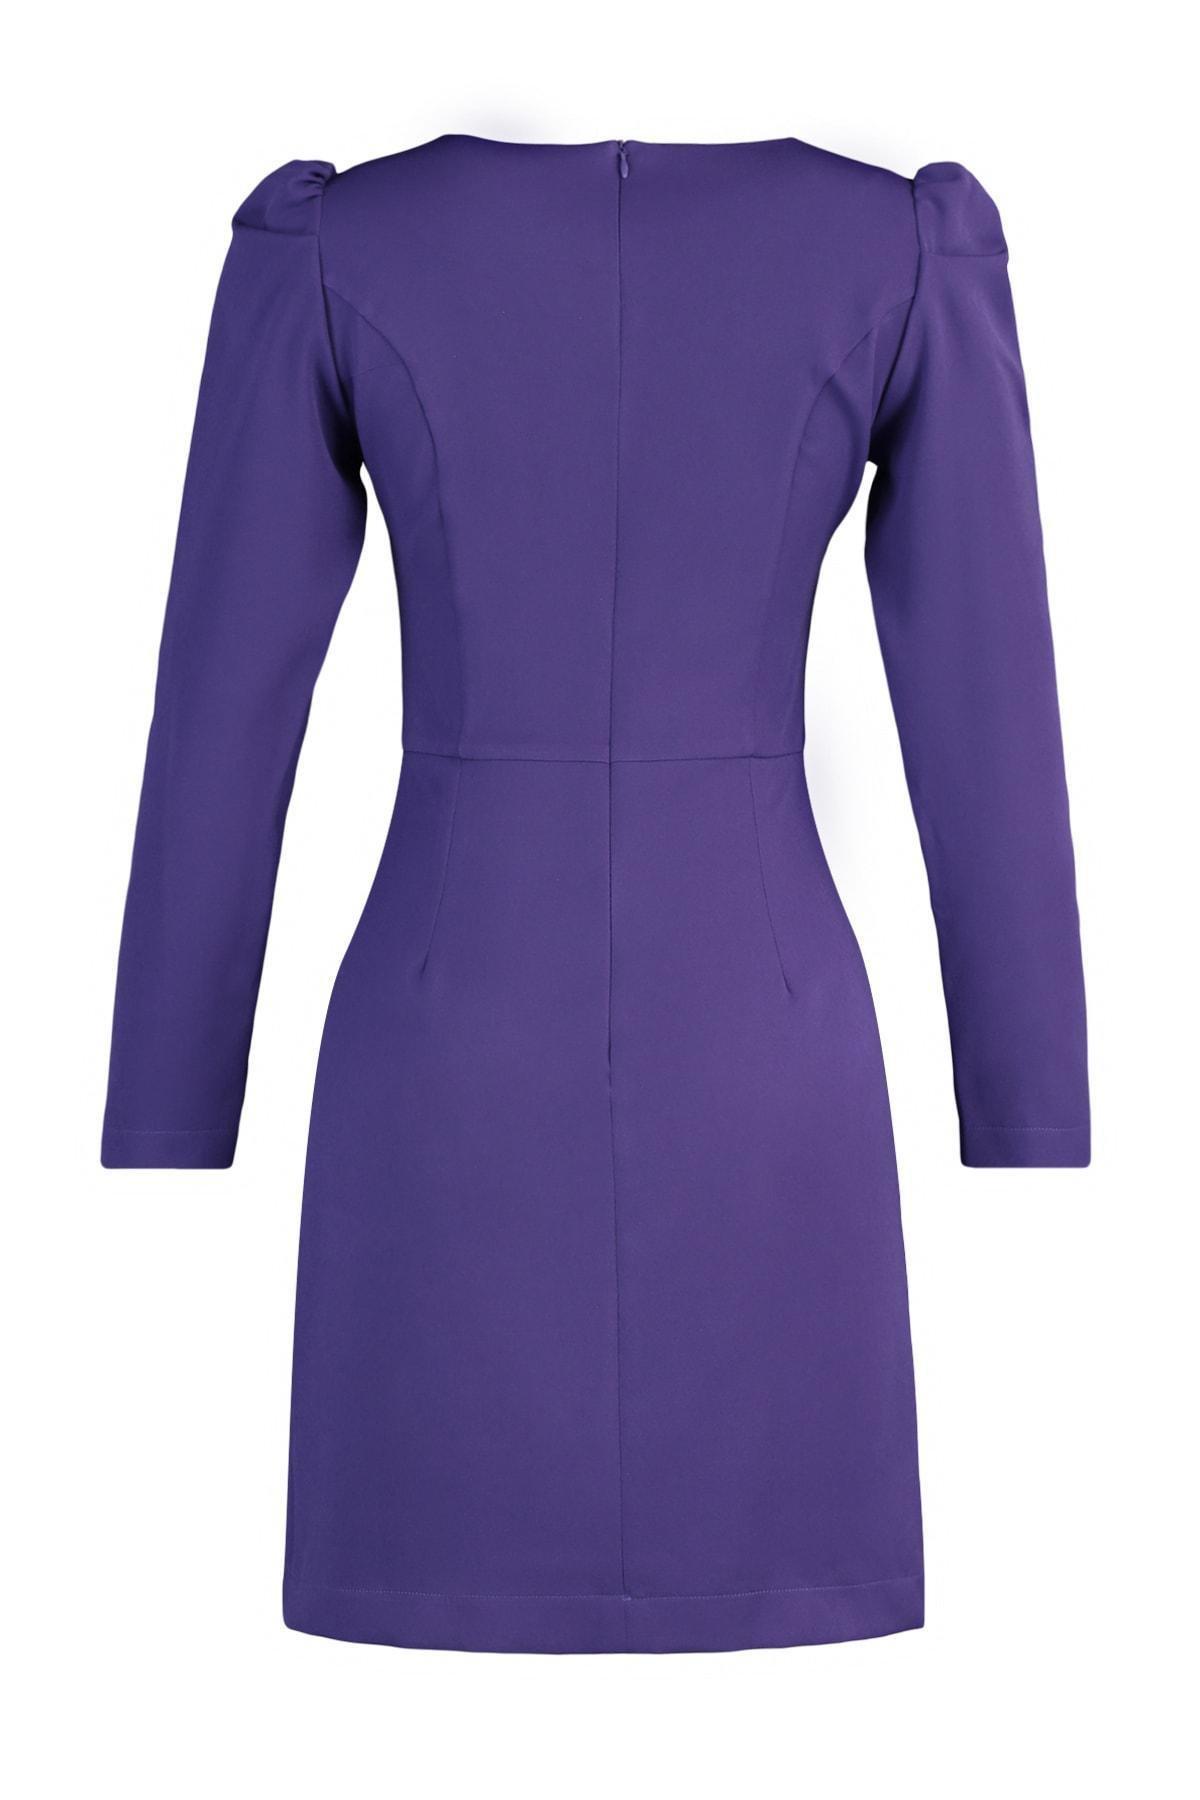 Trendyol - Purple A-Line Mini Dress